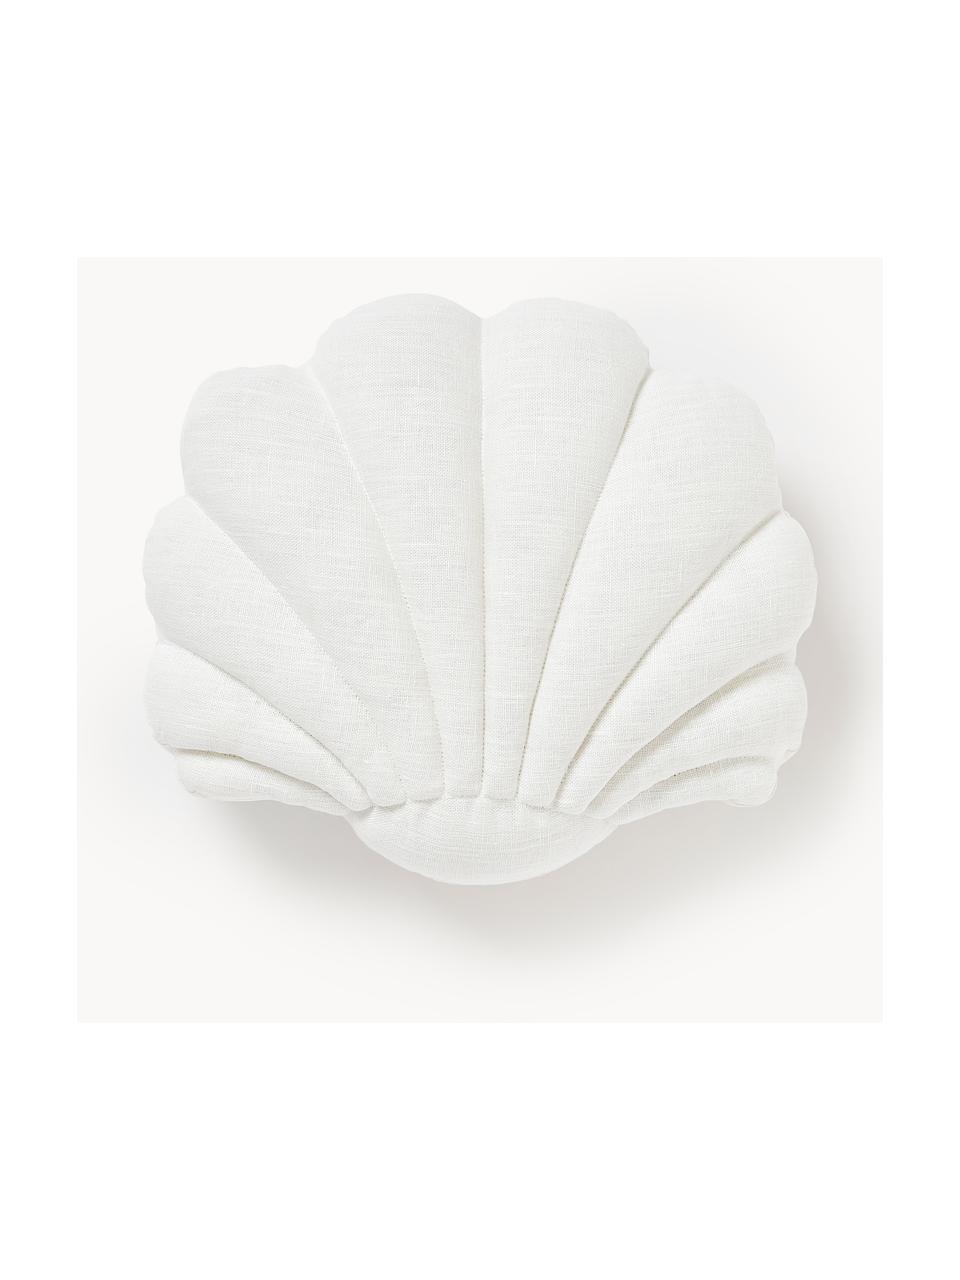 Coussin coquillage en lin Shell, Blanc cassé, larg. 34 x long. 38 cm